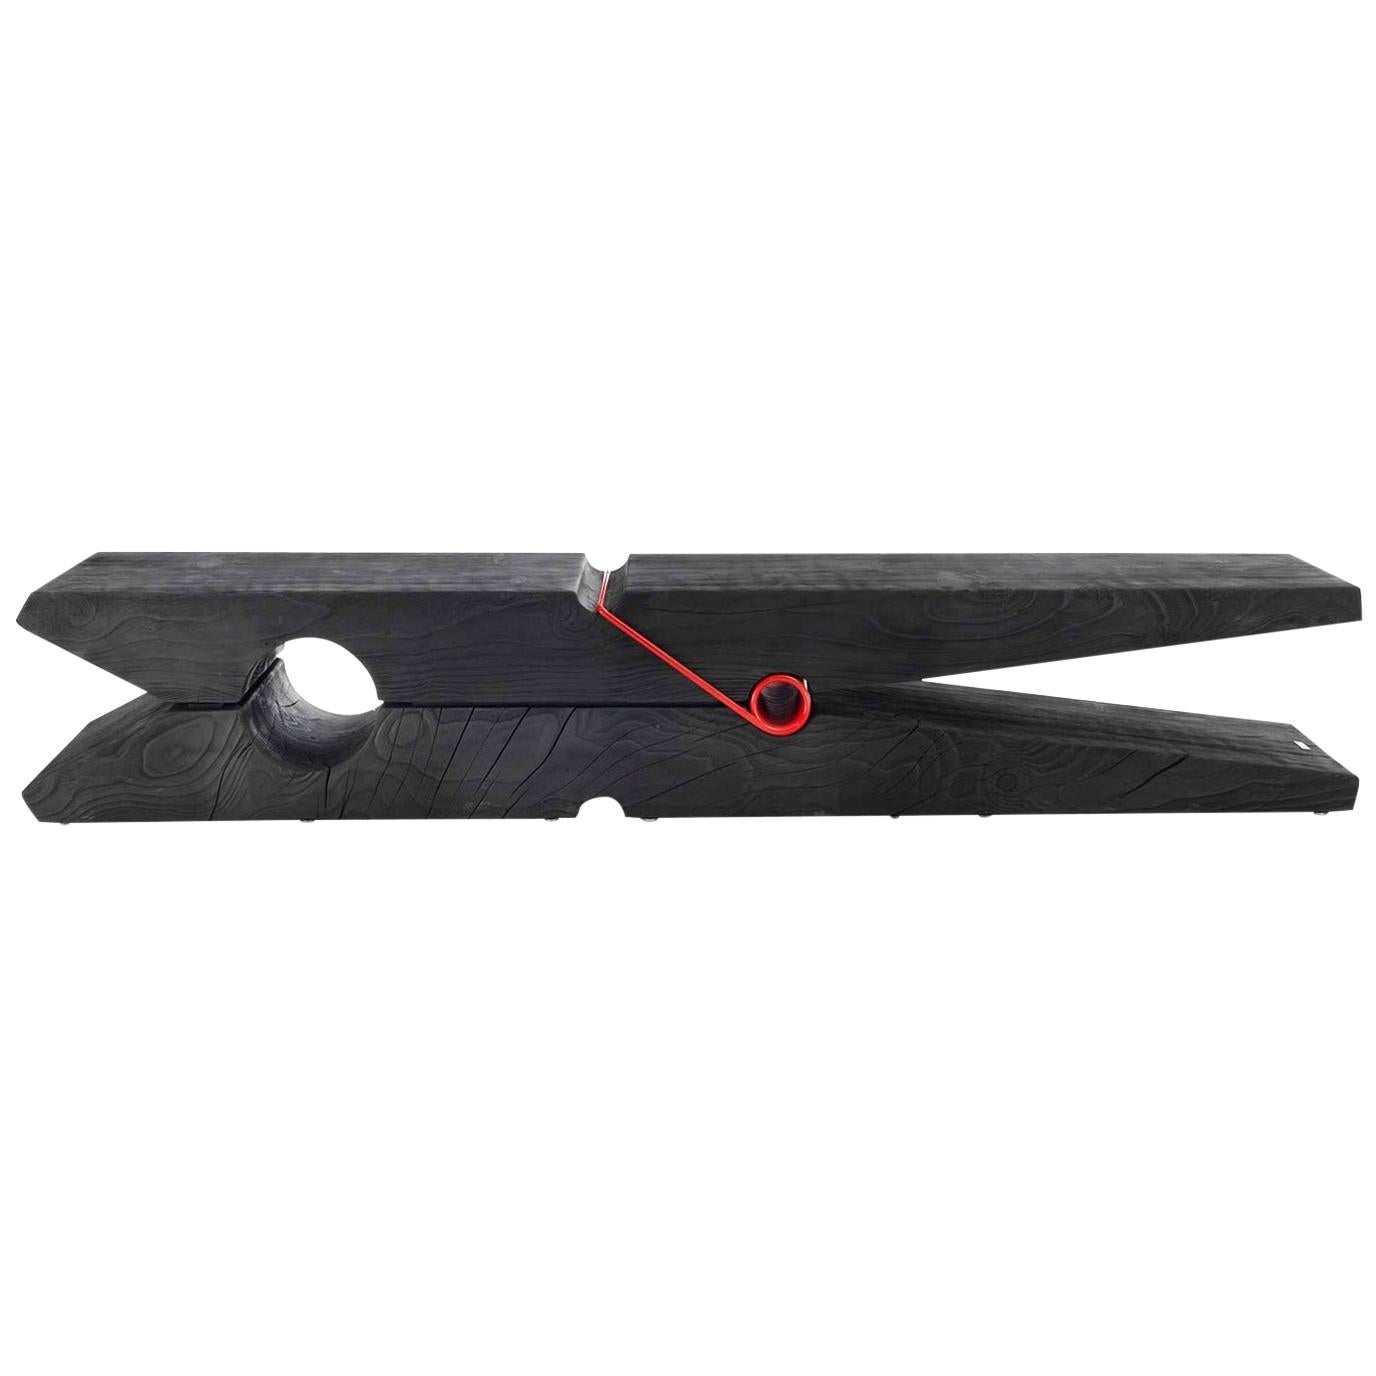 Schwarze schwarze Clothespin 94 Zoll Vulcano-Bank mit roter Eisenfeder, Made in Italy